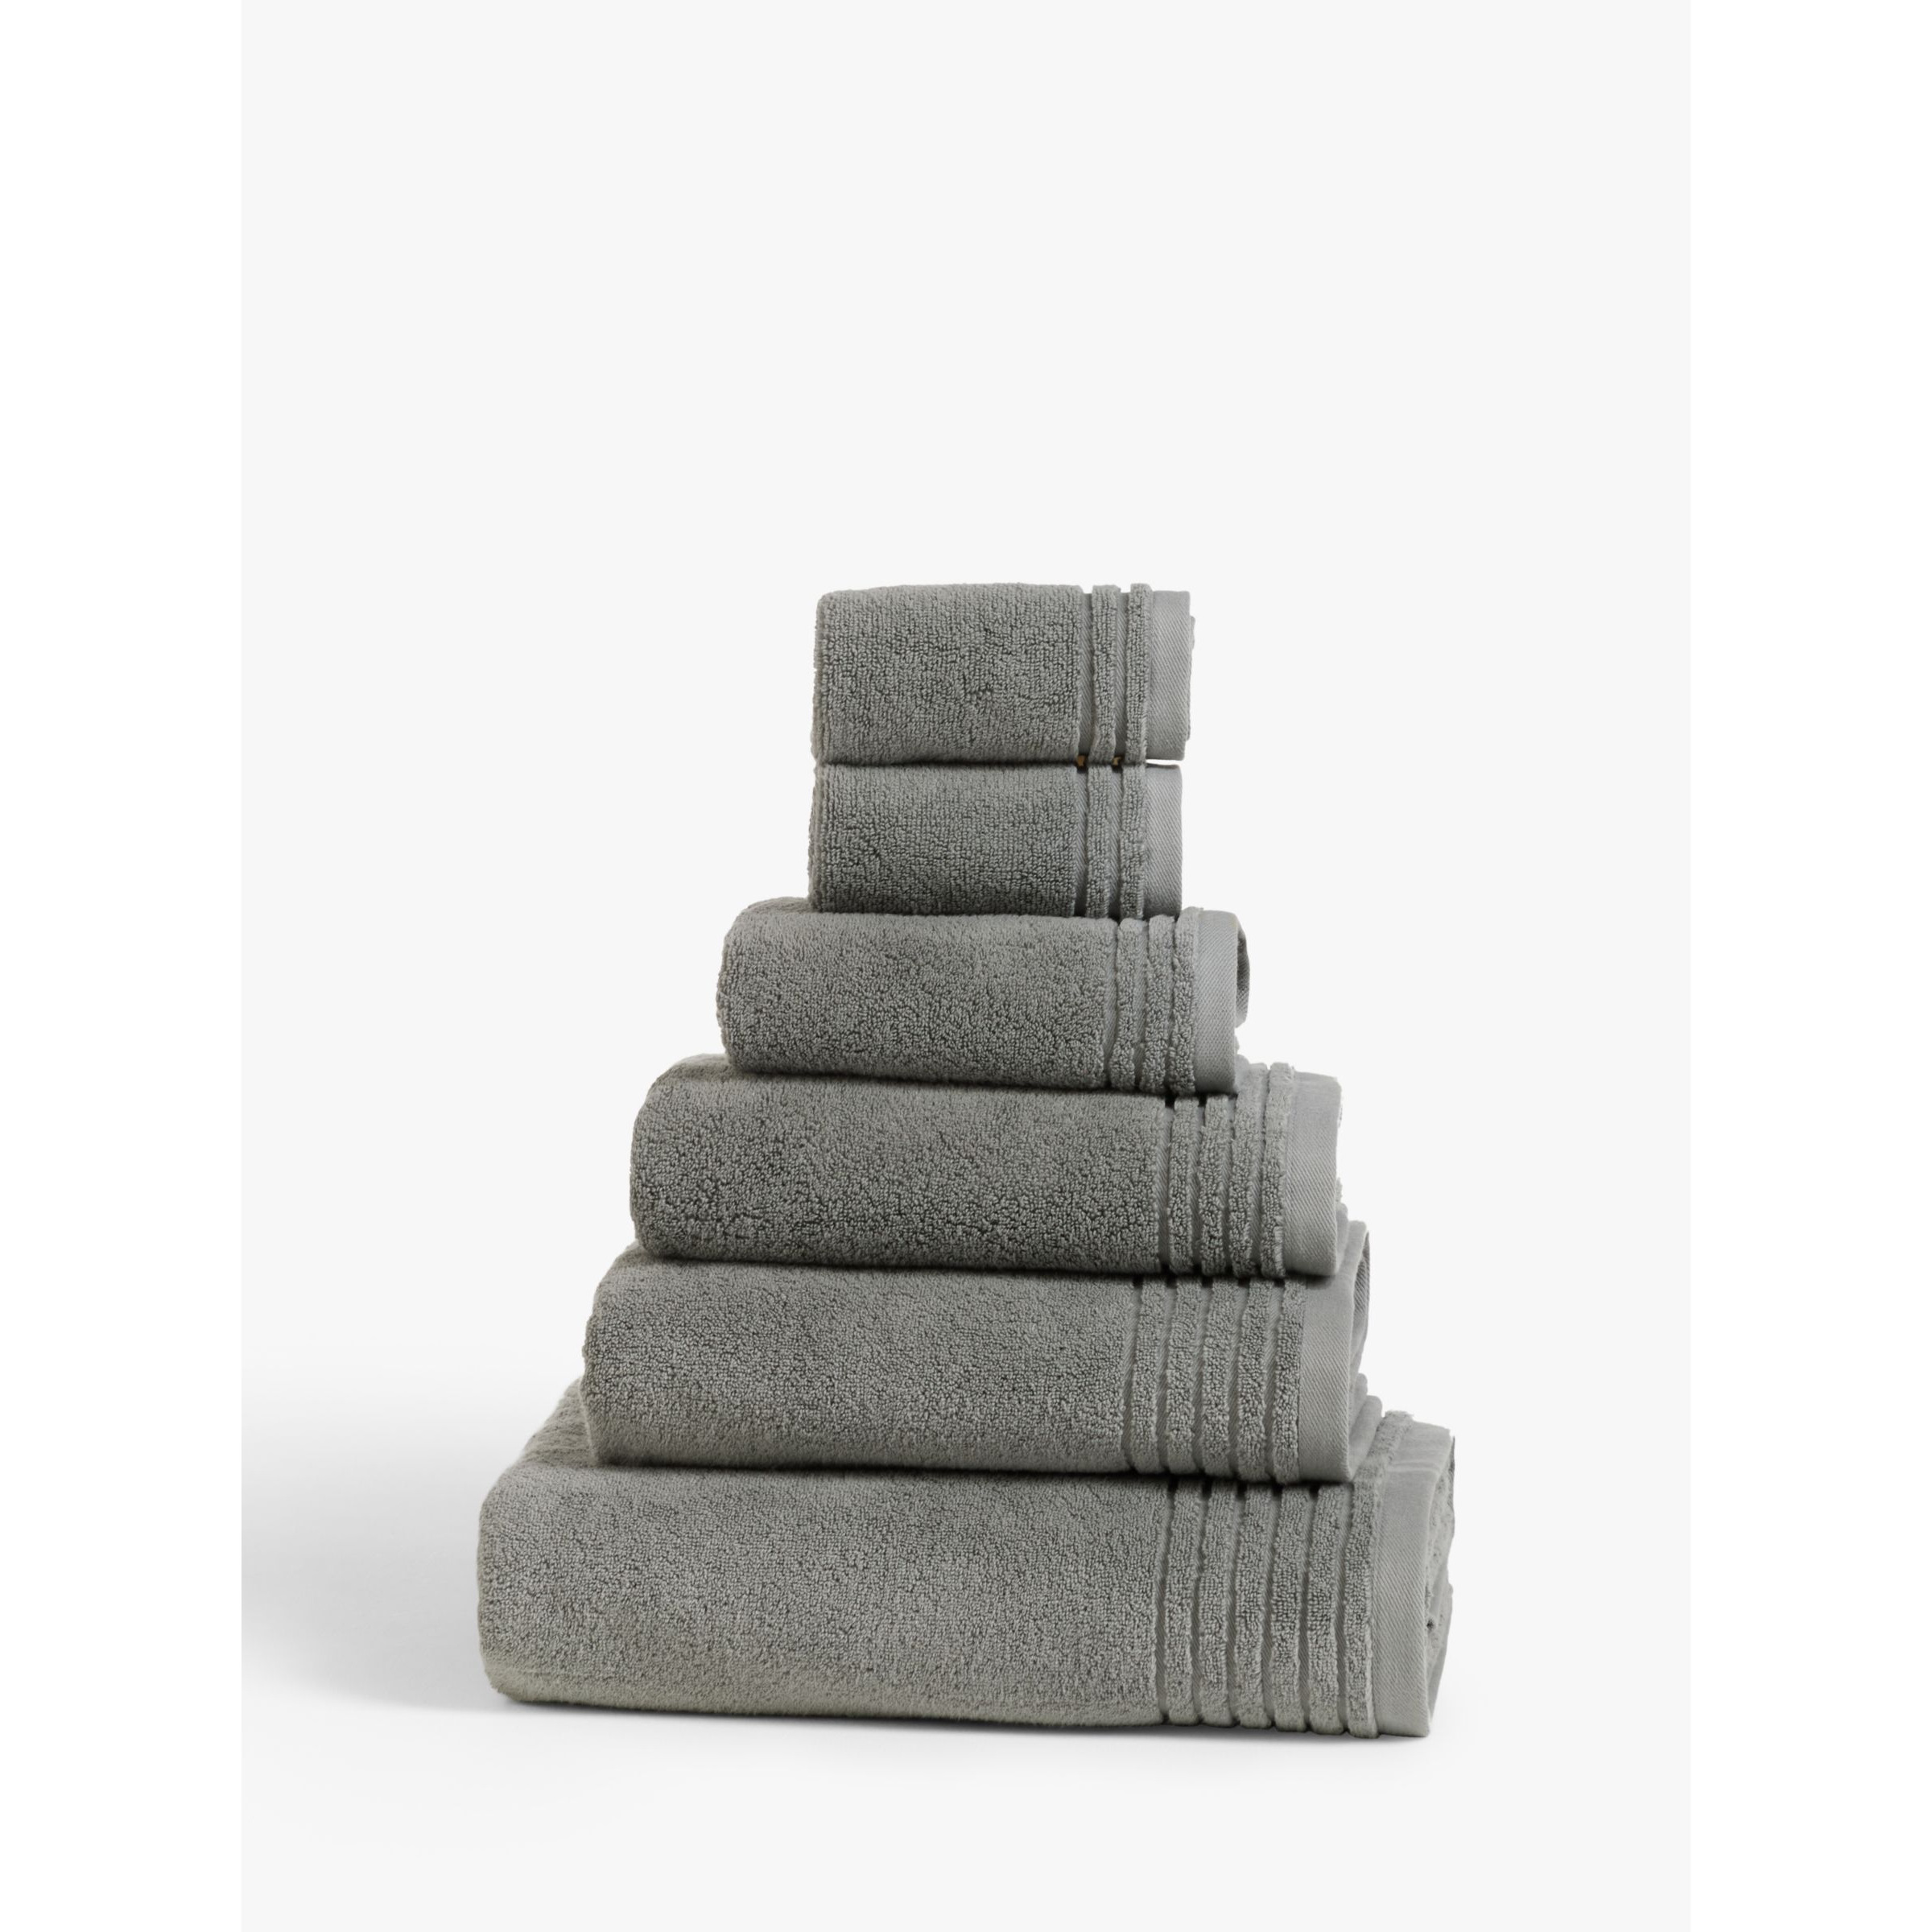 John Lewis Ultra Soft Cotton Towels - image 1